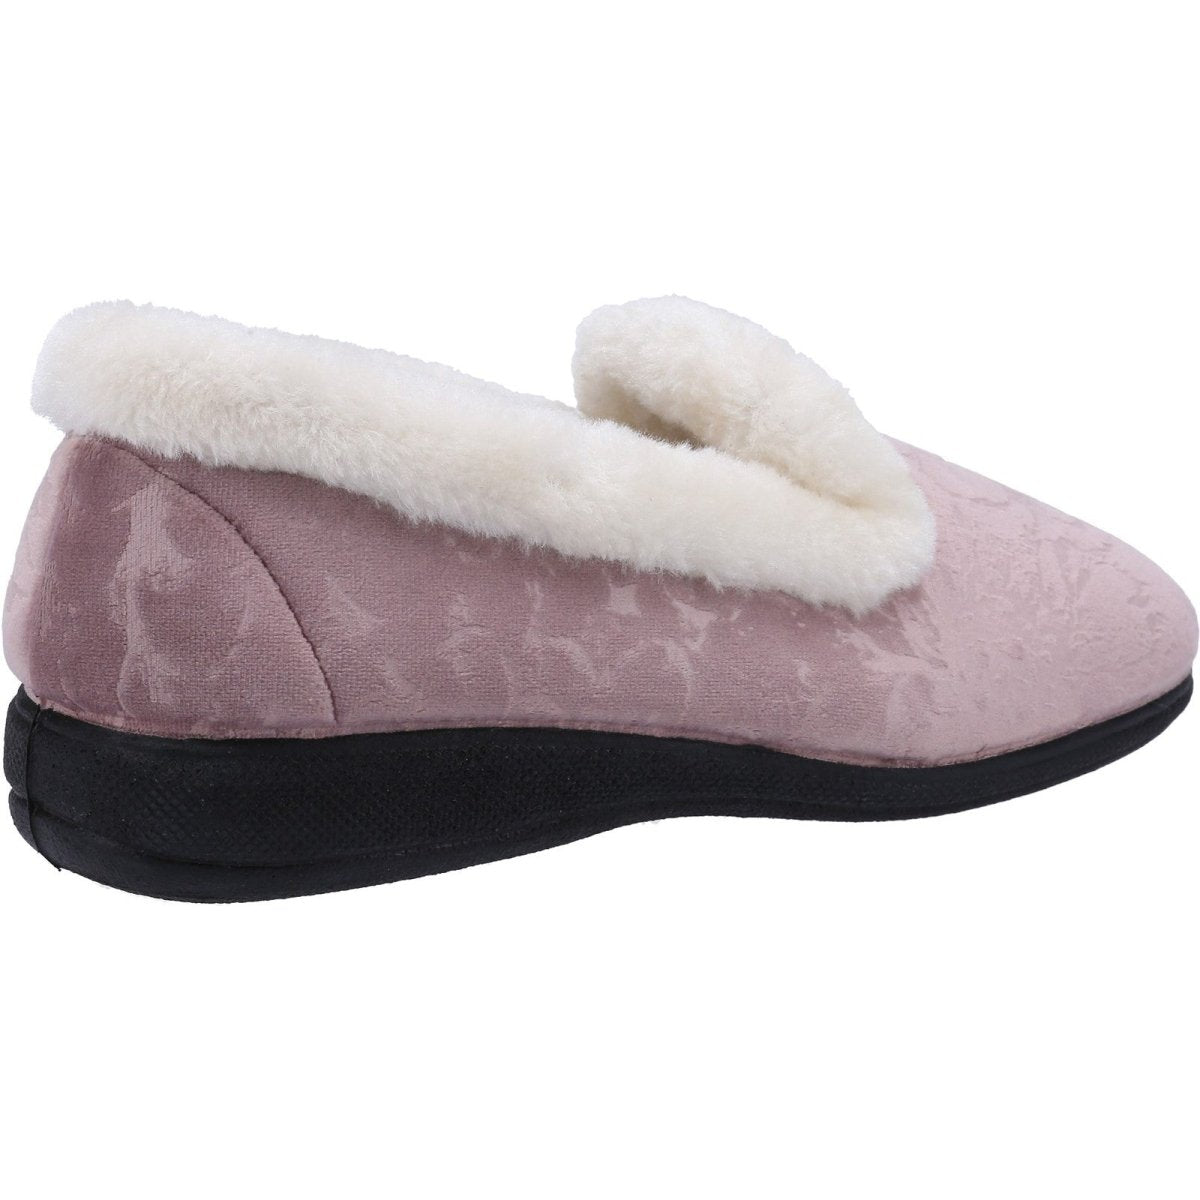 Fleet & Foster Adelaide Memory Foam Classic Ladies Slippers - Shoe Store Direct